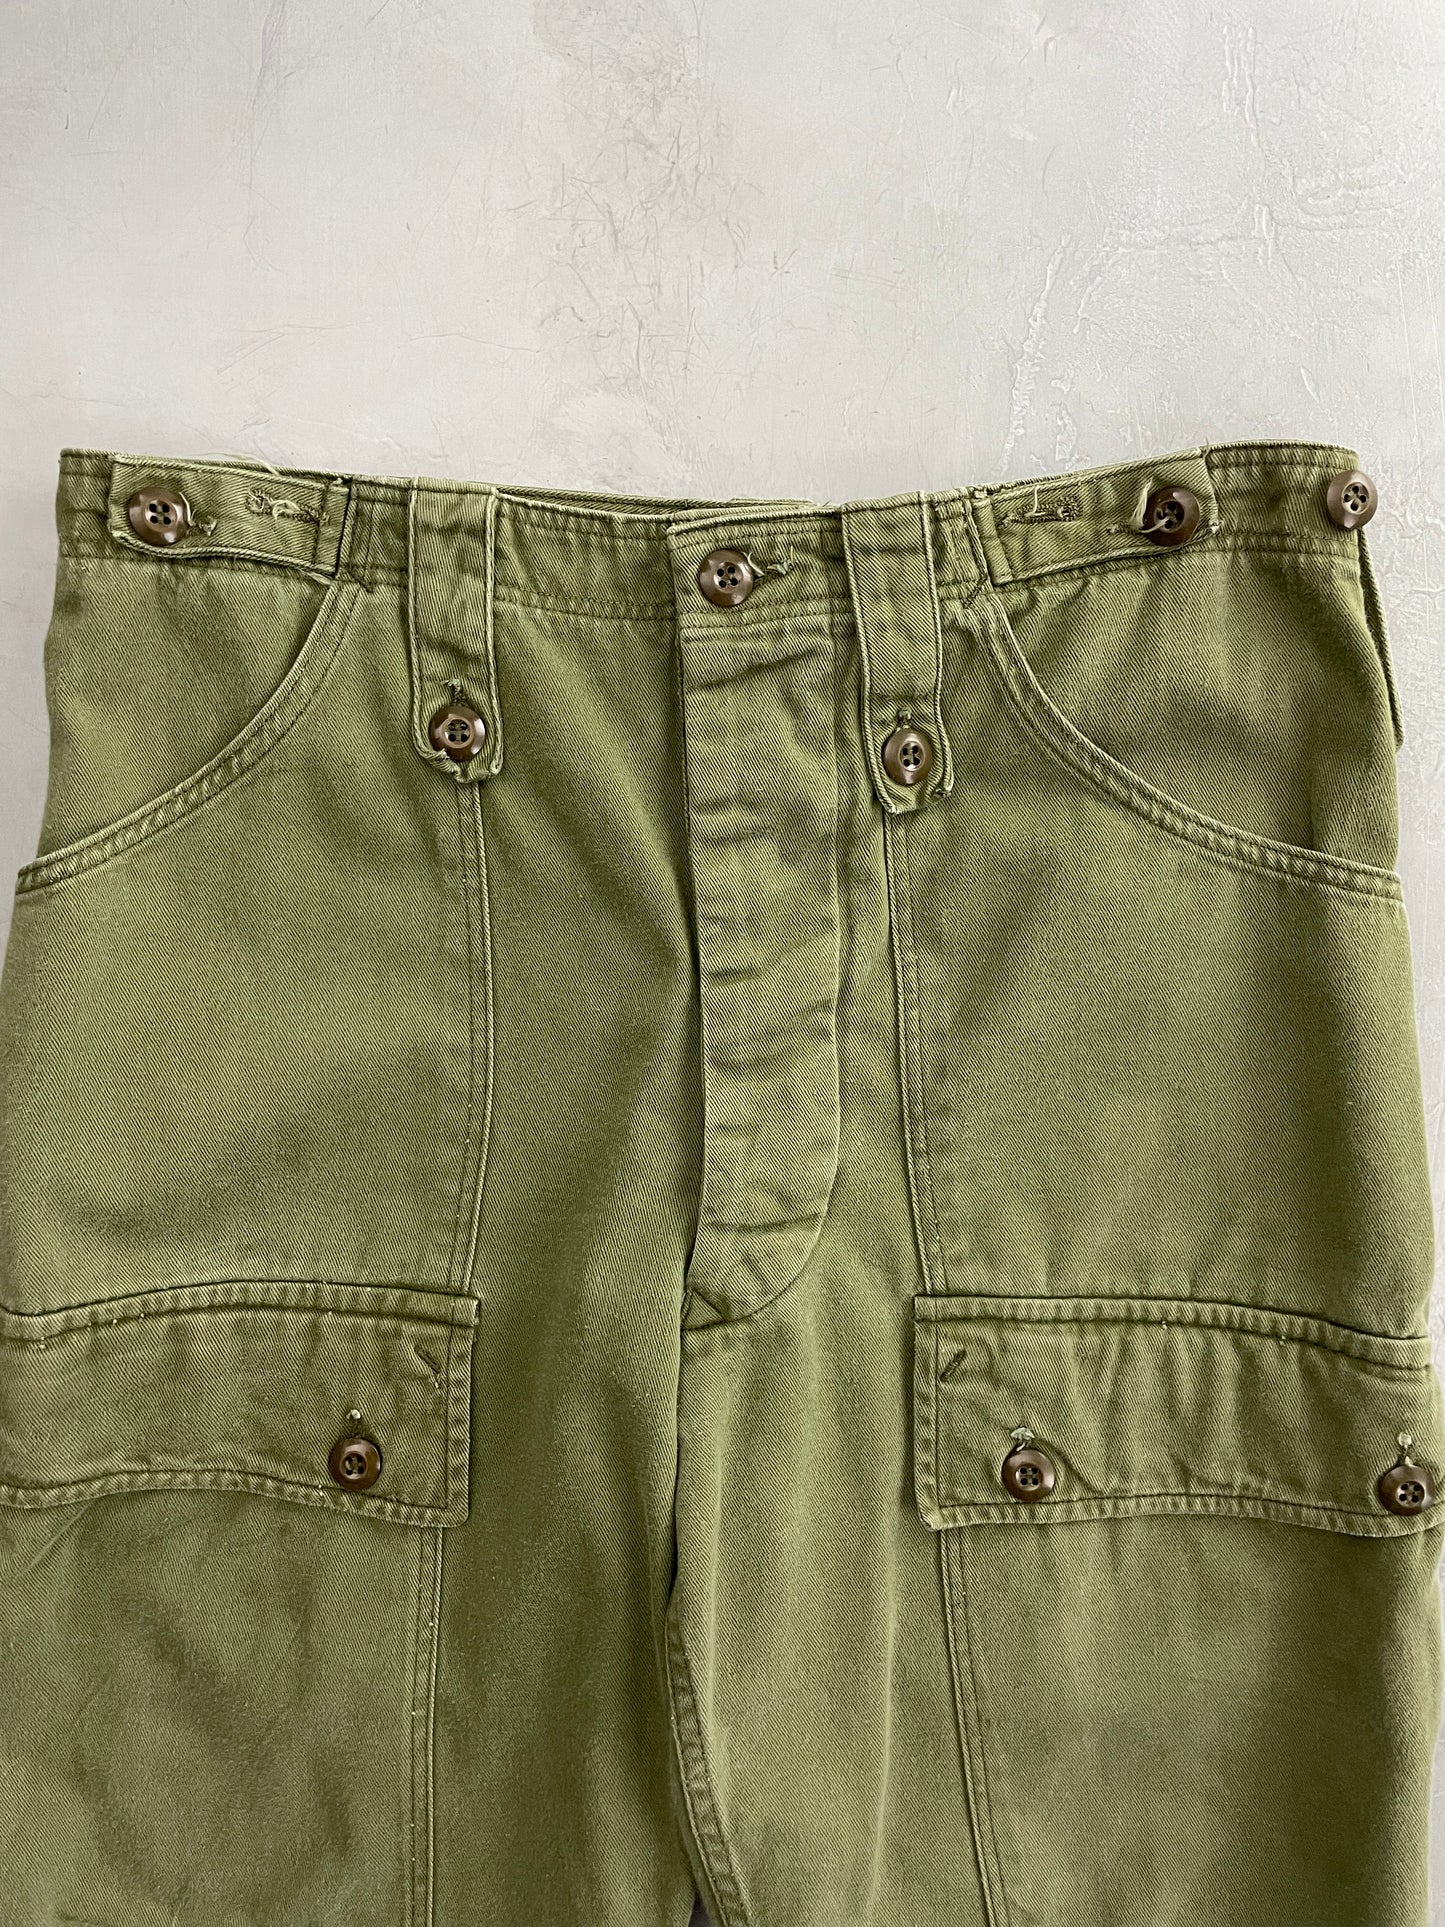 Aus Army Cargo Shorts [32"]